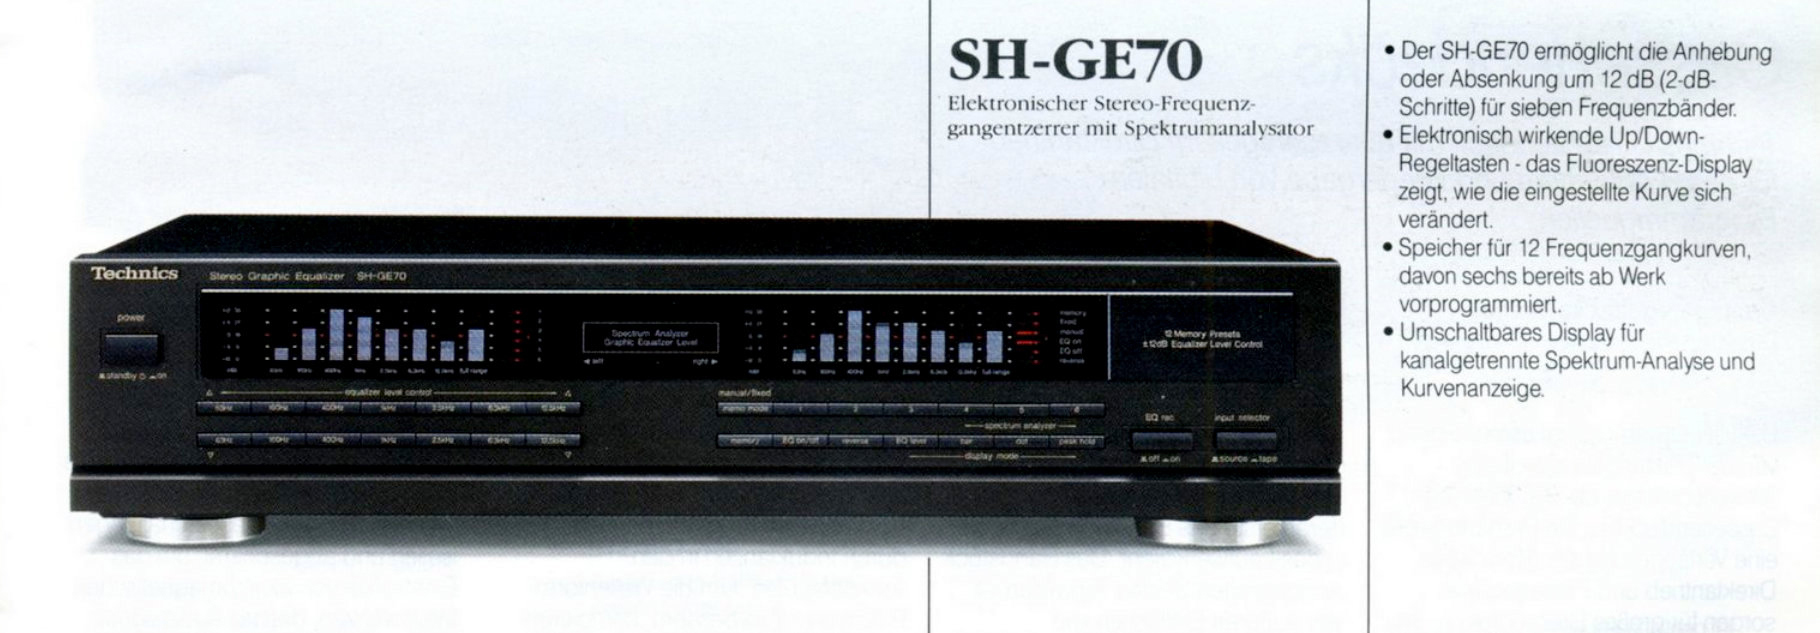 Technics SH-GE 70-Prospekt-1991.jpg